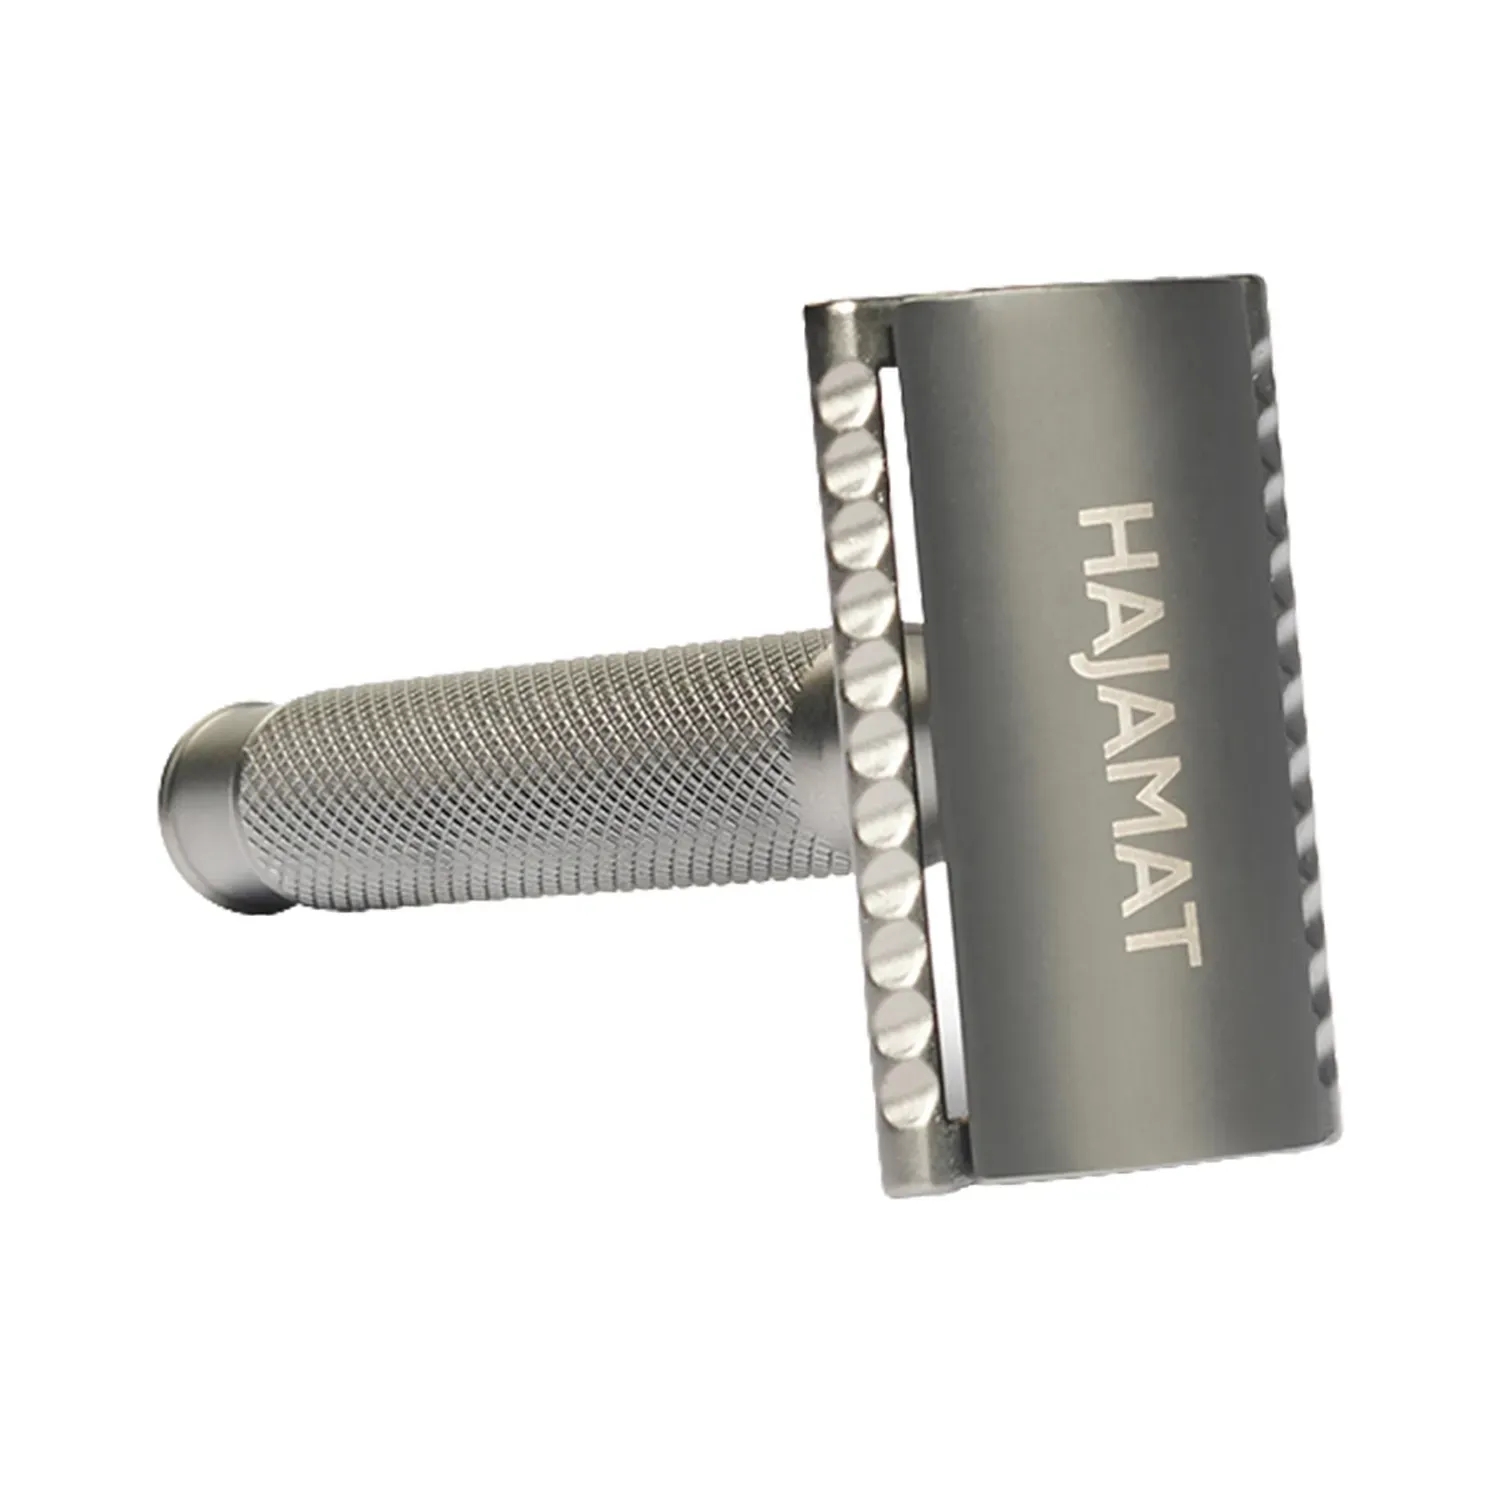 Hajamat | Hajamat Scythe Double Edge Safety Razor, Stainless Steel 304, Gunmetal Finish